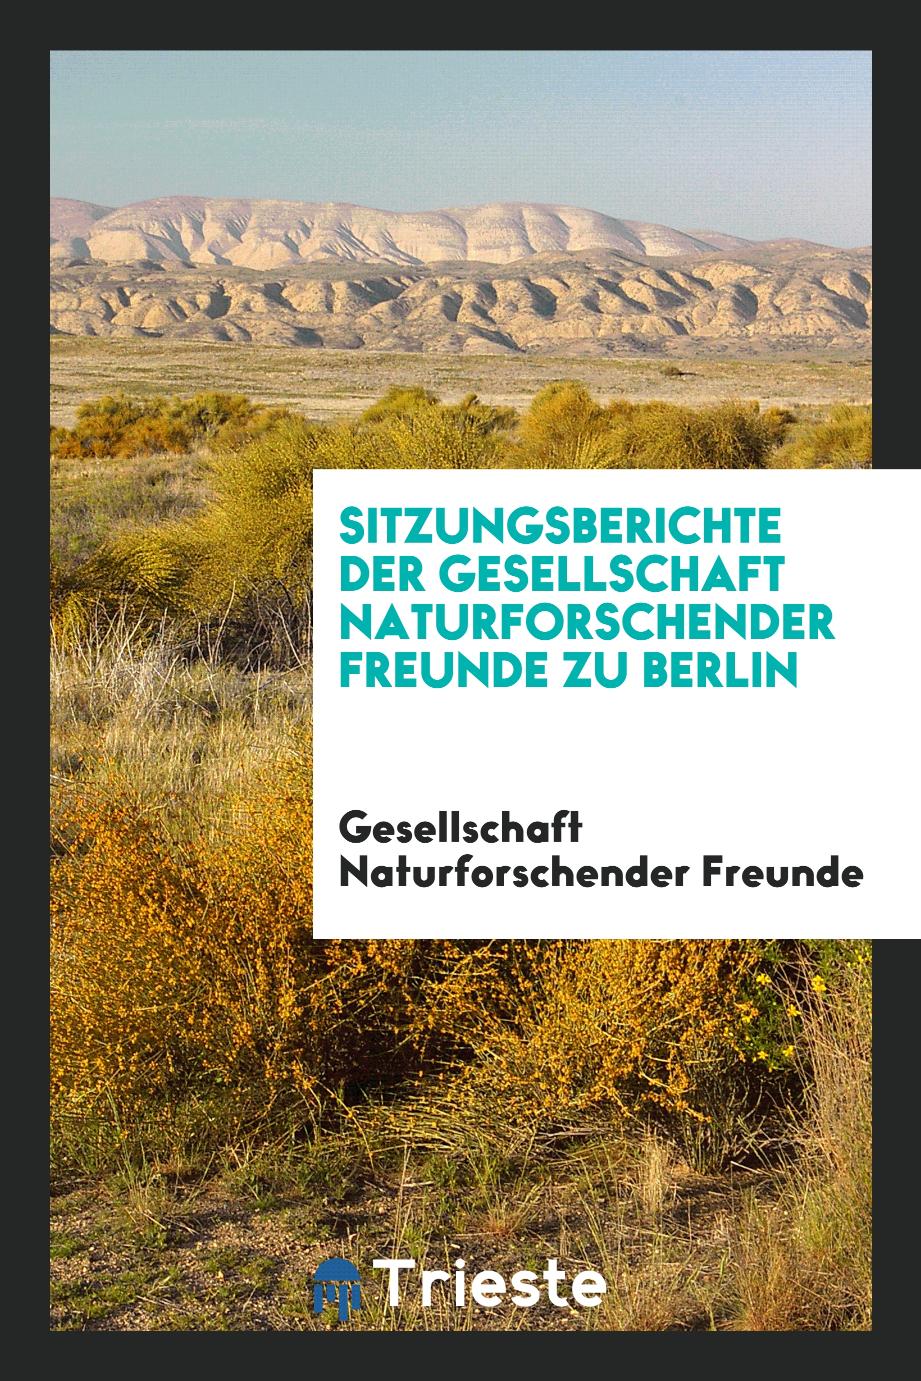 Sitzungsberichte der Gesellschaft Naturforschender Freunde zu Berlin